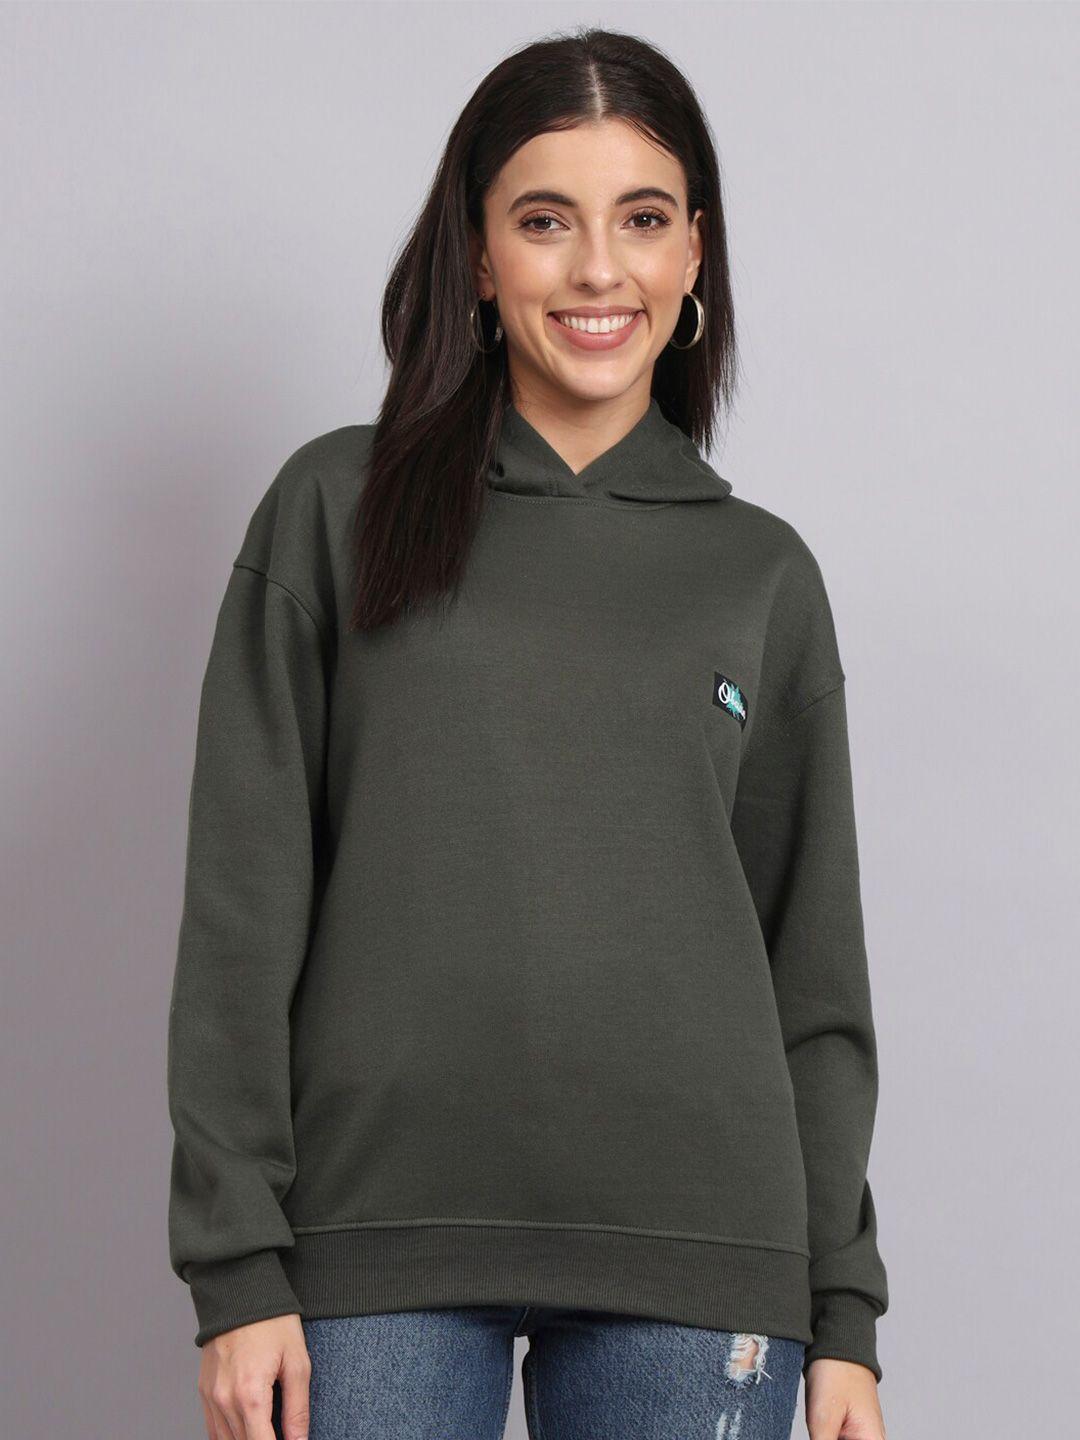 obaan-hooded-cotton-pullover-sweatshirt